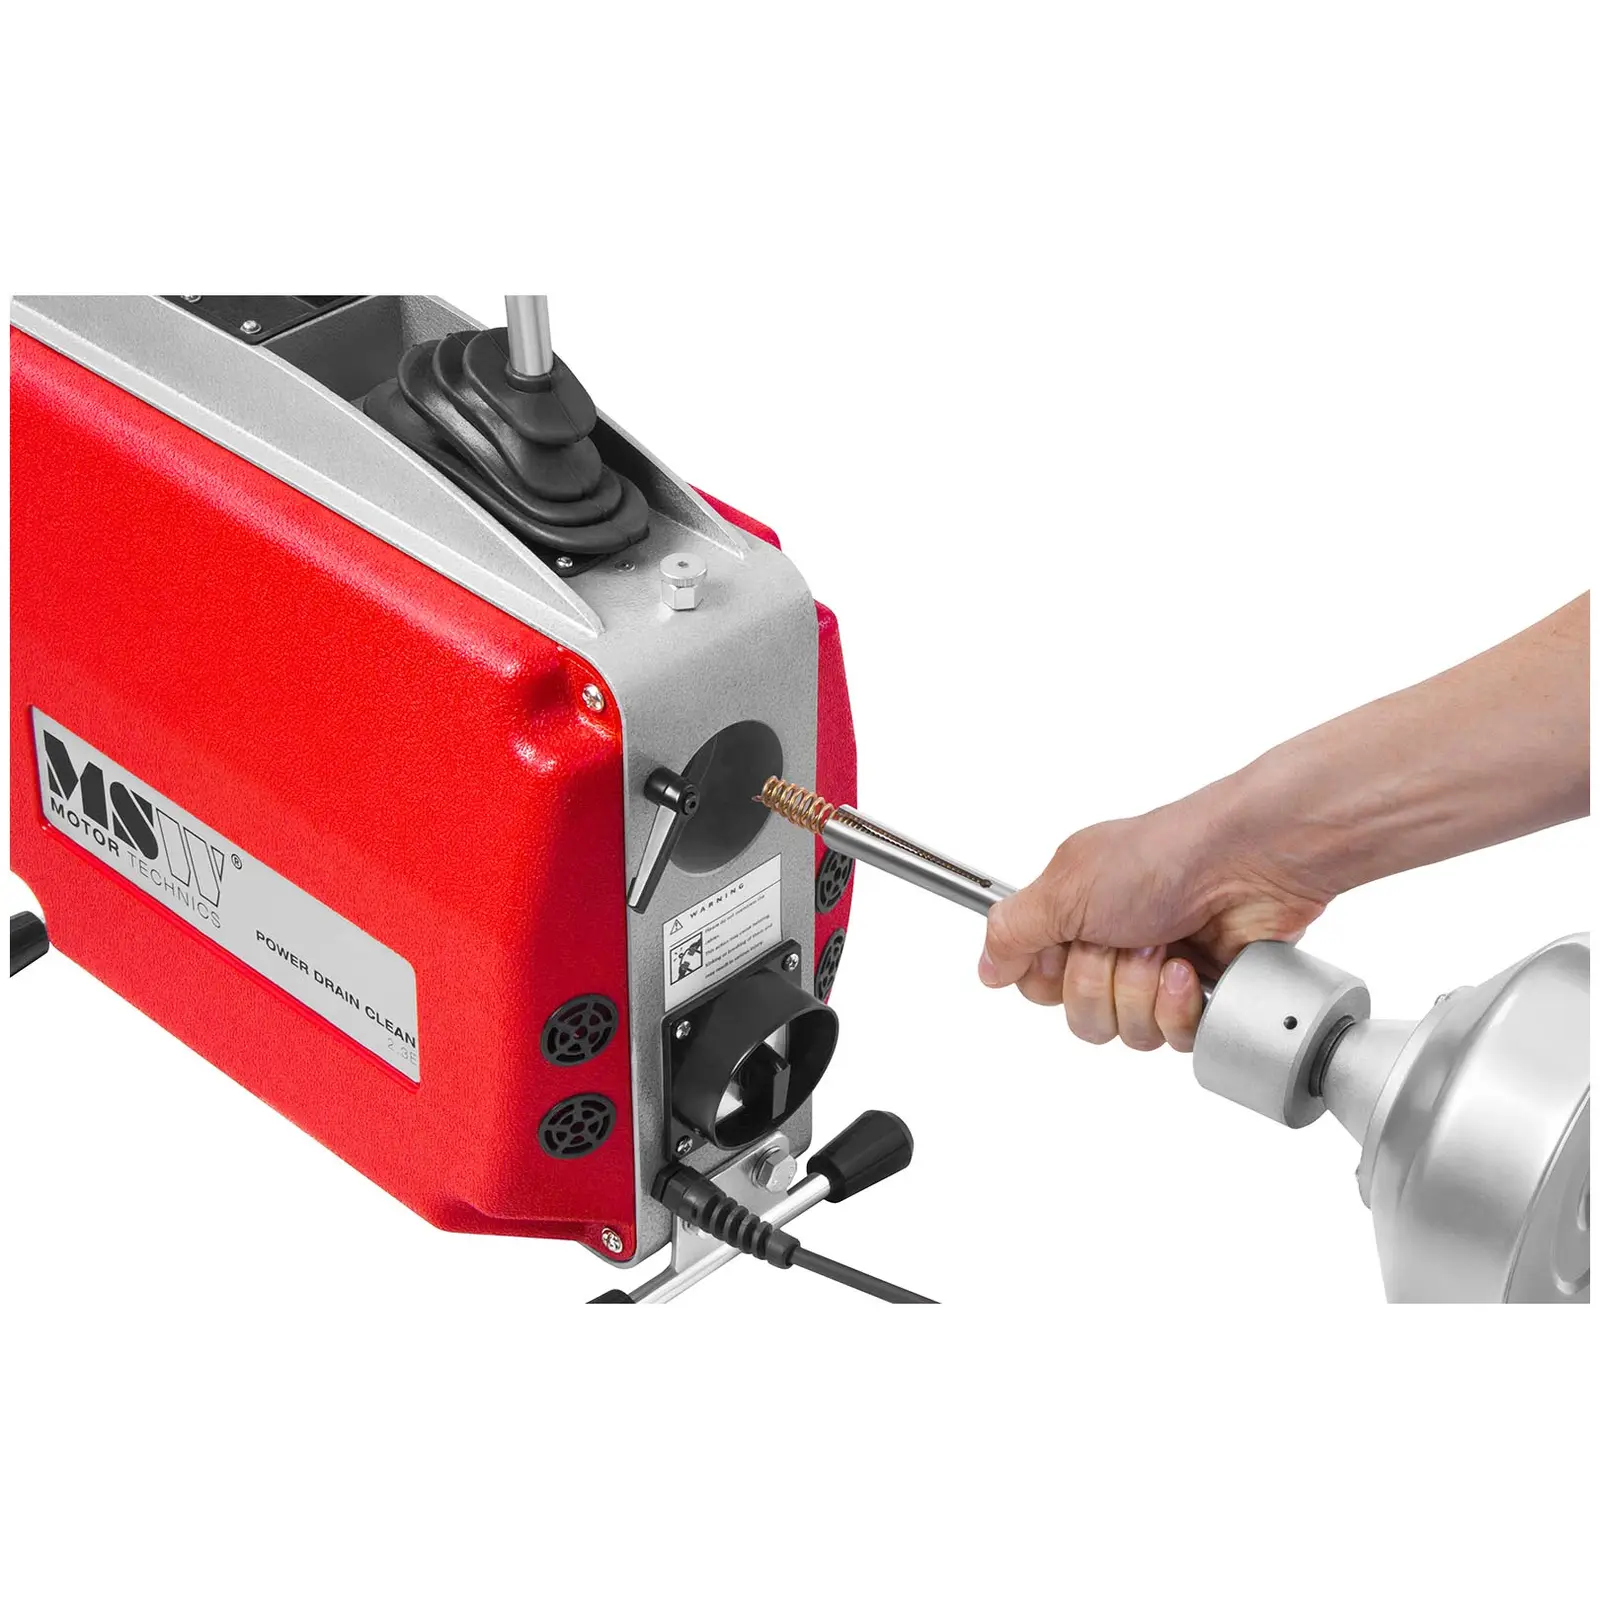 Drain Cleaning Machine 570 Watt 400 rpm Ø 20 - 150 mm